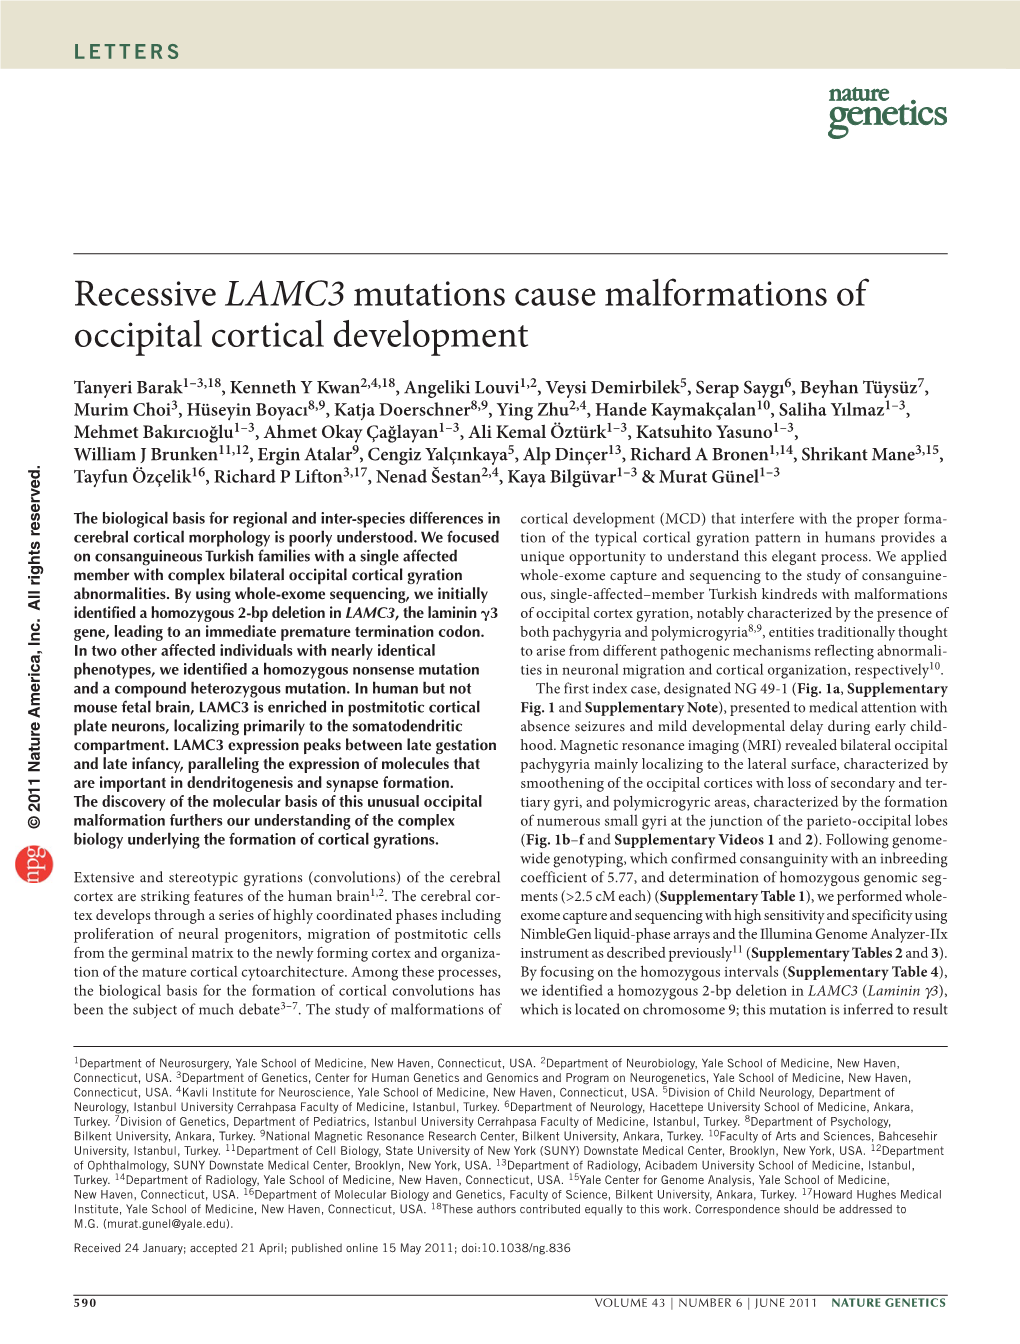 Recessive LAMC3 Mutations Cause Malformations of Occipital Cortical Development